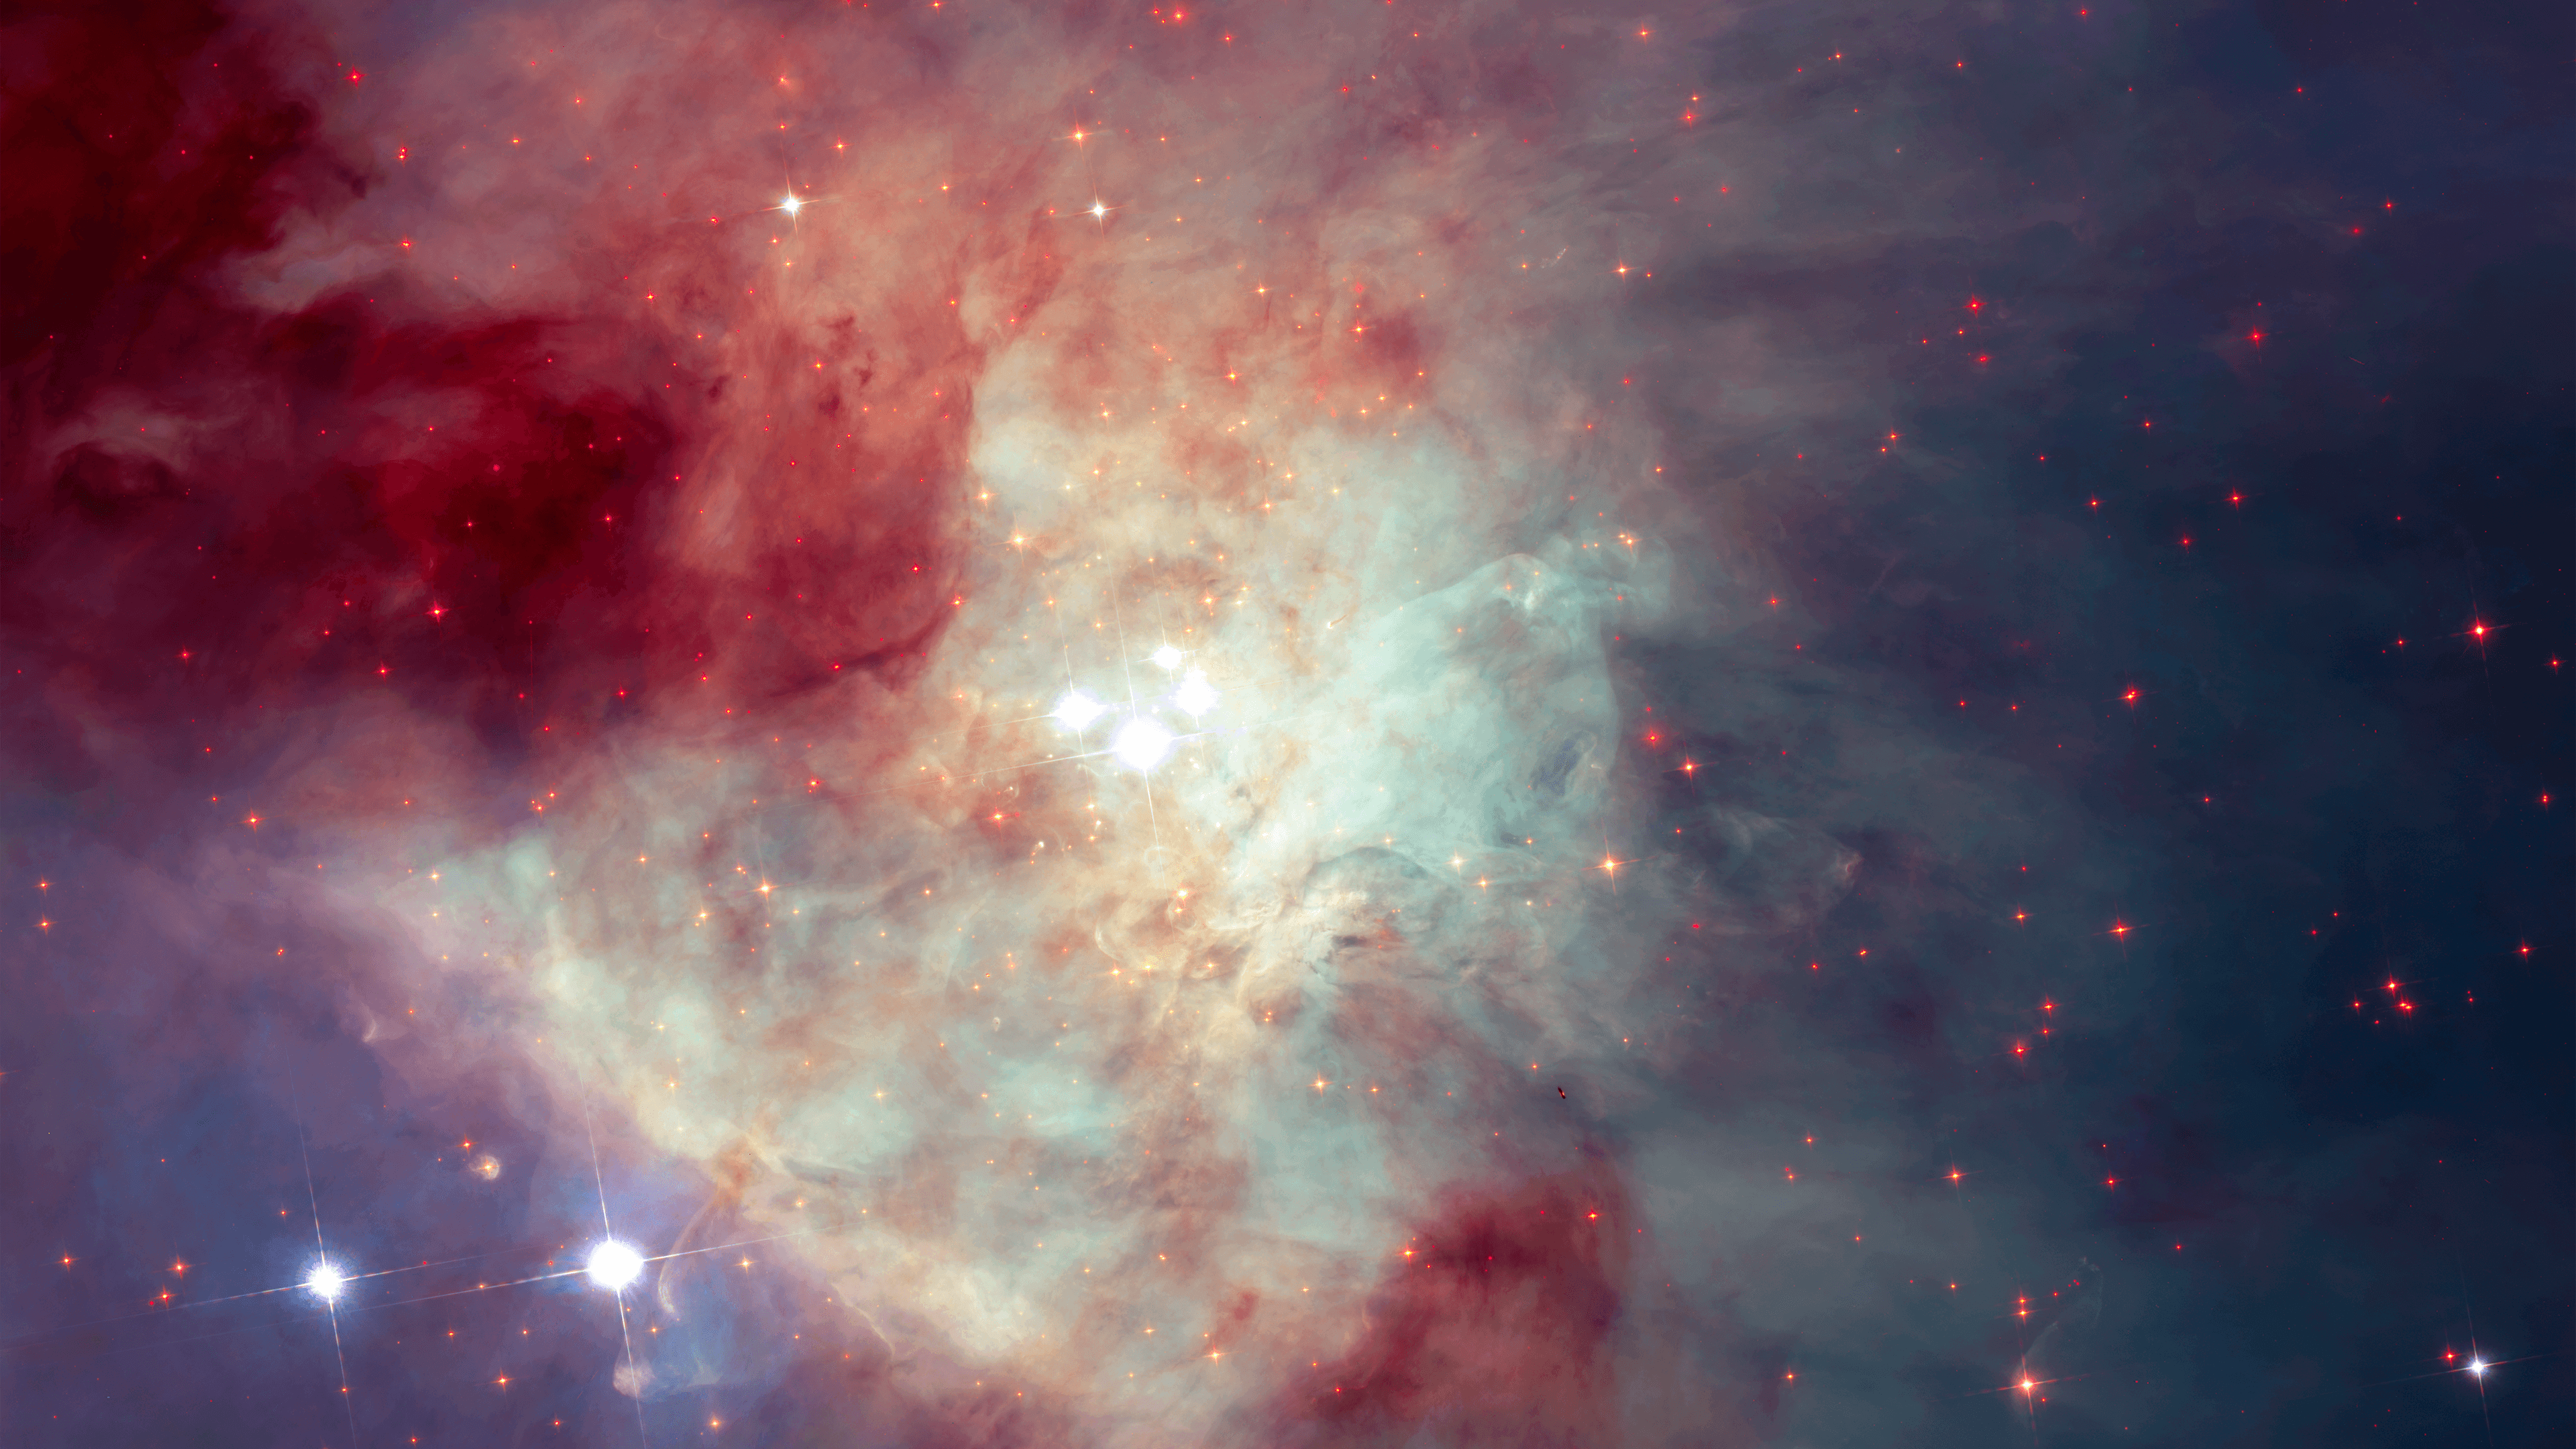 HubbleSite: Image